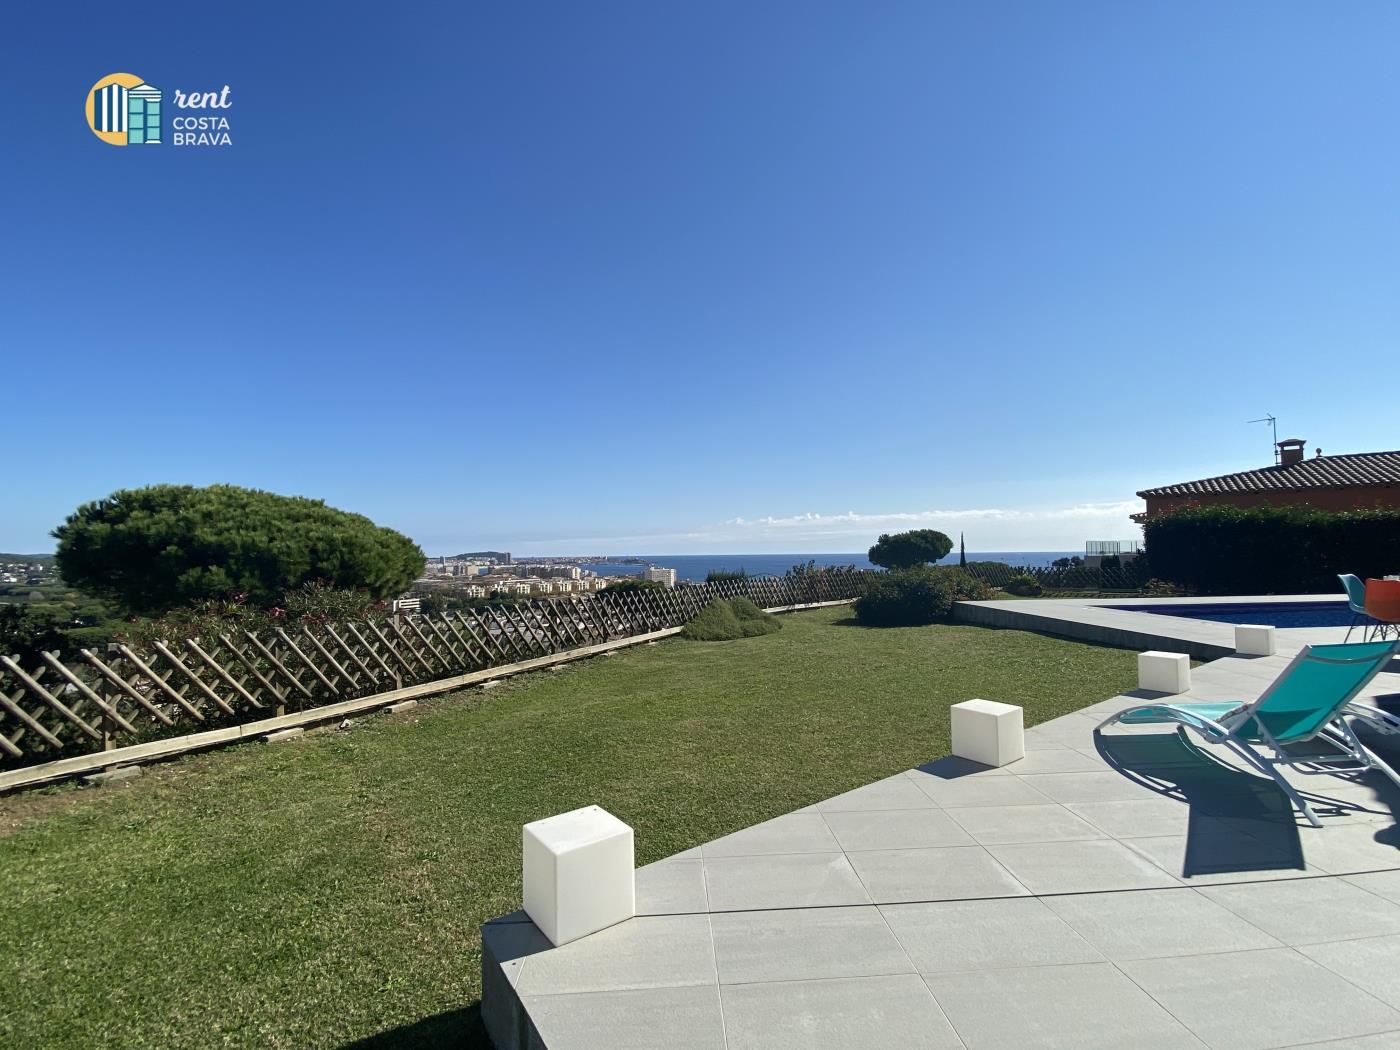 Villa Saramel geräumiges und modernes mit spektakulärem Blick auf Palamos8 in Sant Antoni de Calonge